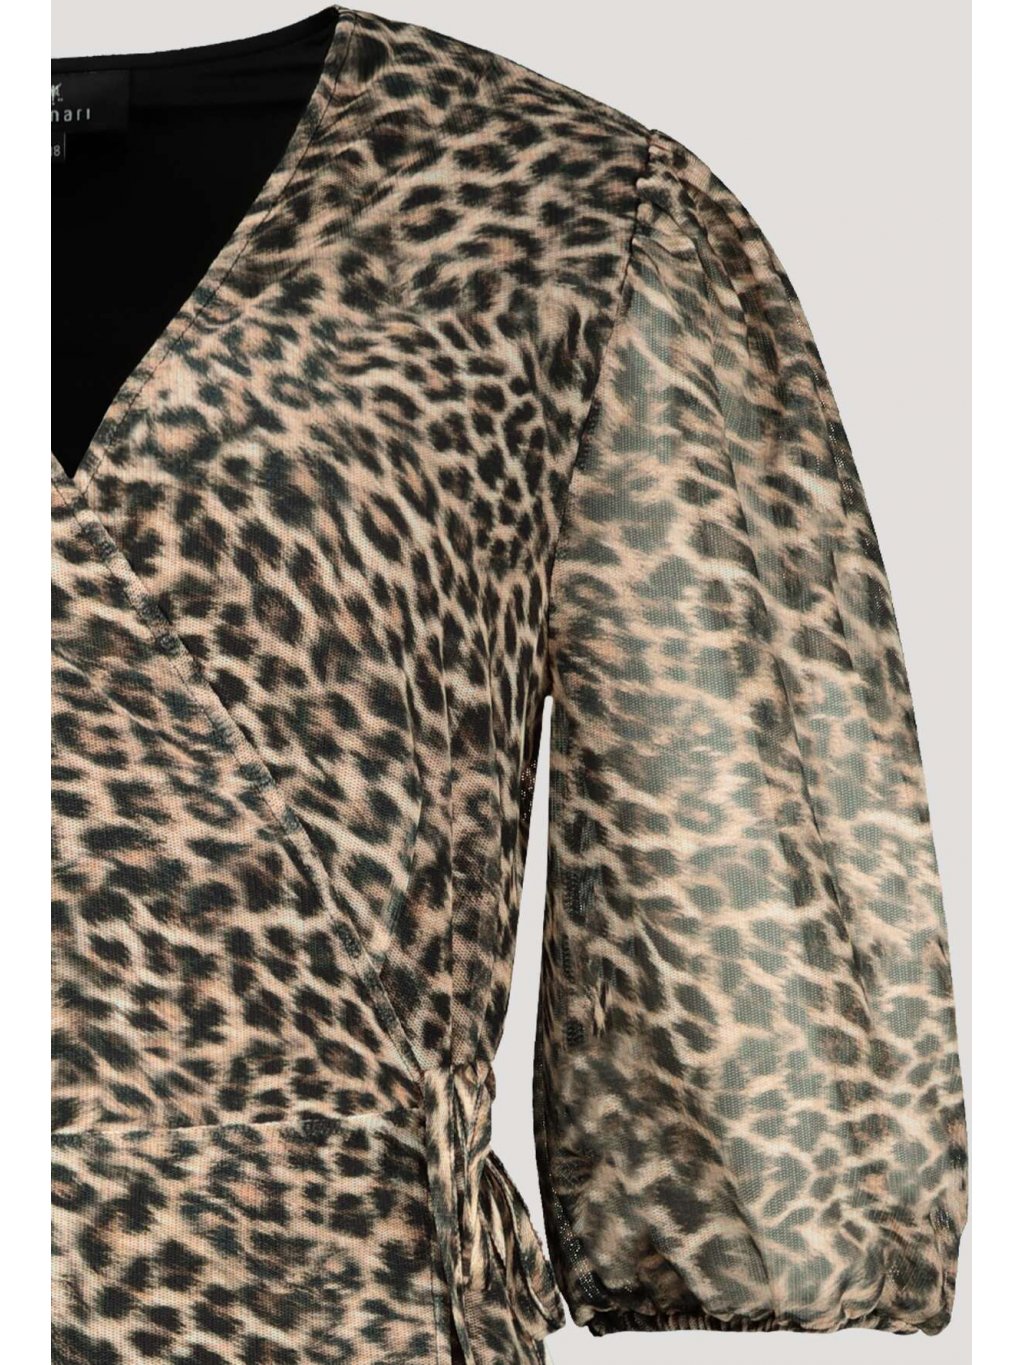 Šaty Monari leopardí vzor dlouhé 6346